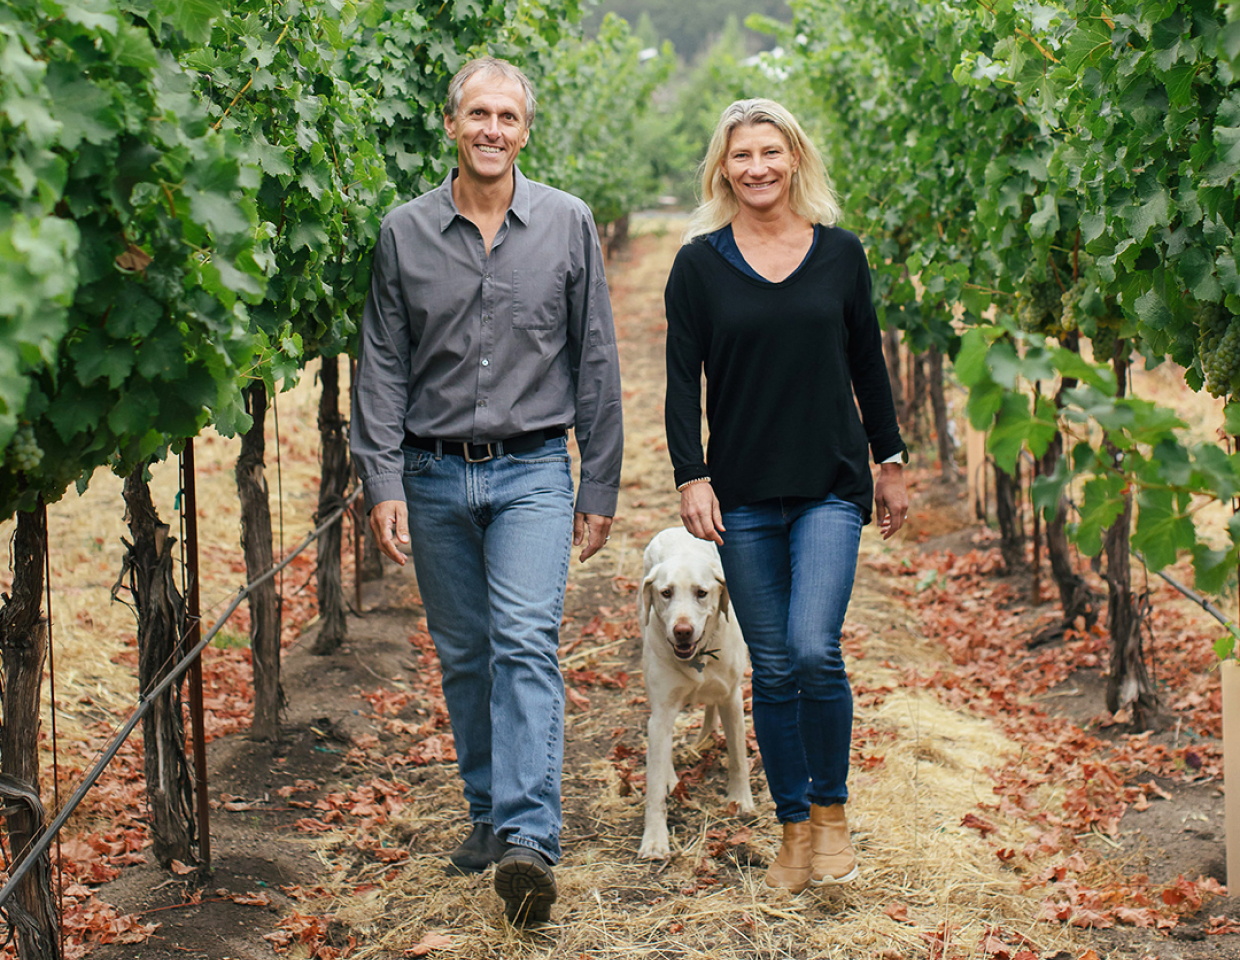 Joel Gott and Sarah Gott walking in a lush, green vineyard with their yellow lab dog between them.